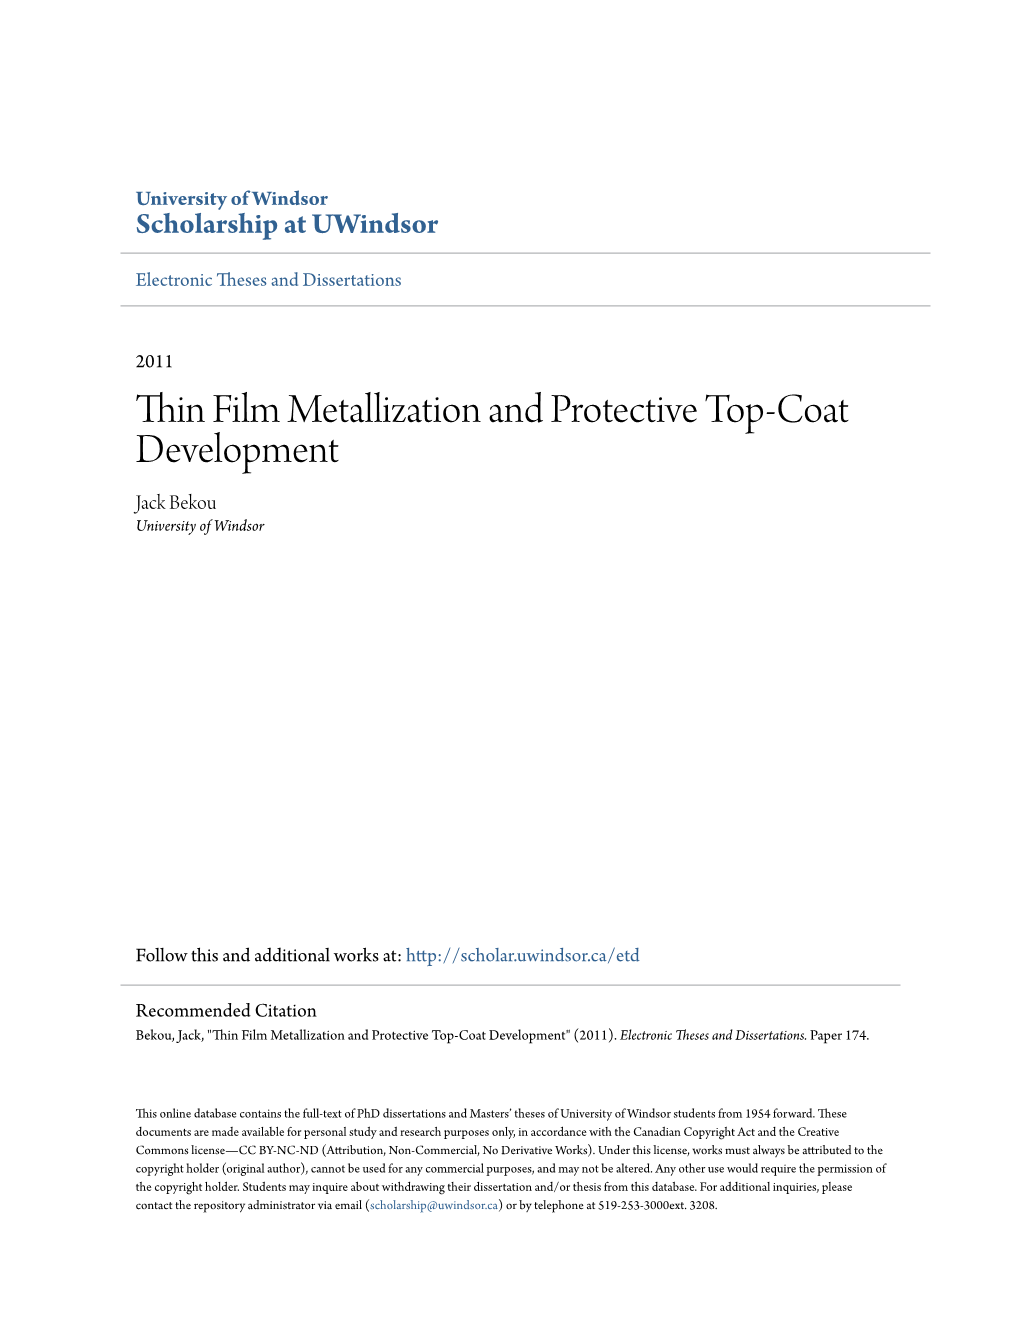 Thin Film Metallization and Protective Top-Coat Development